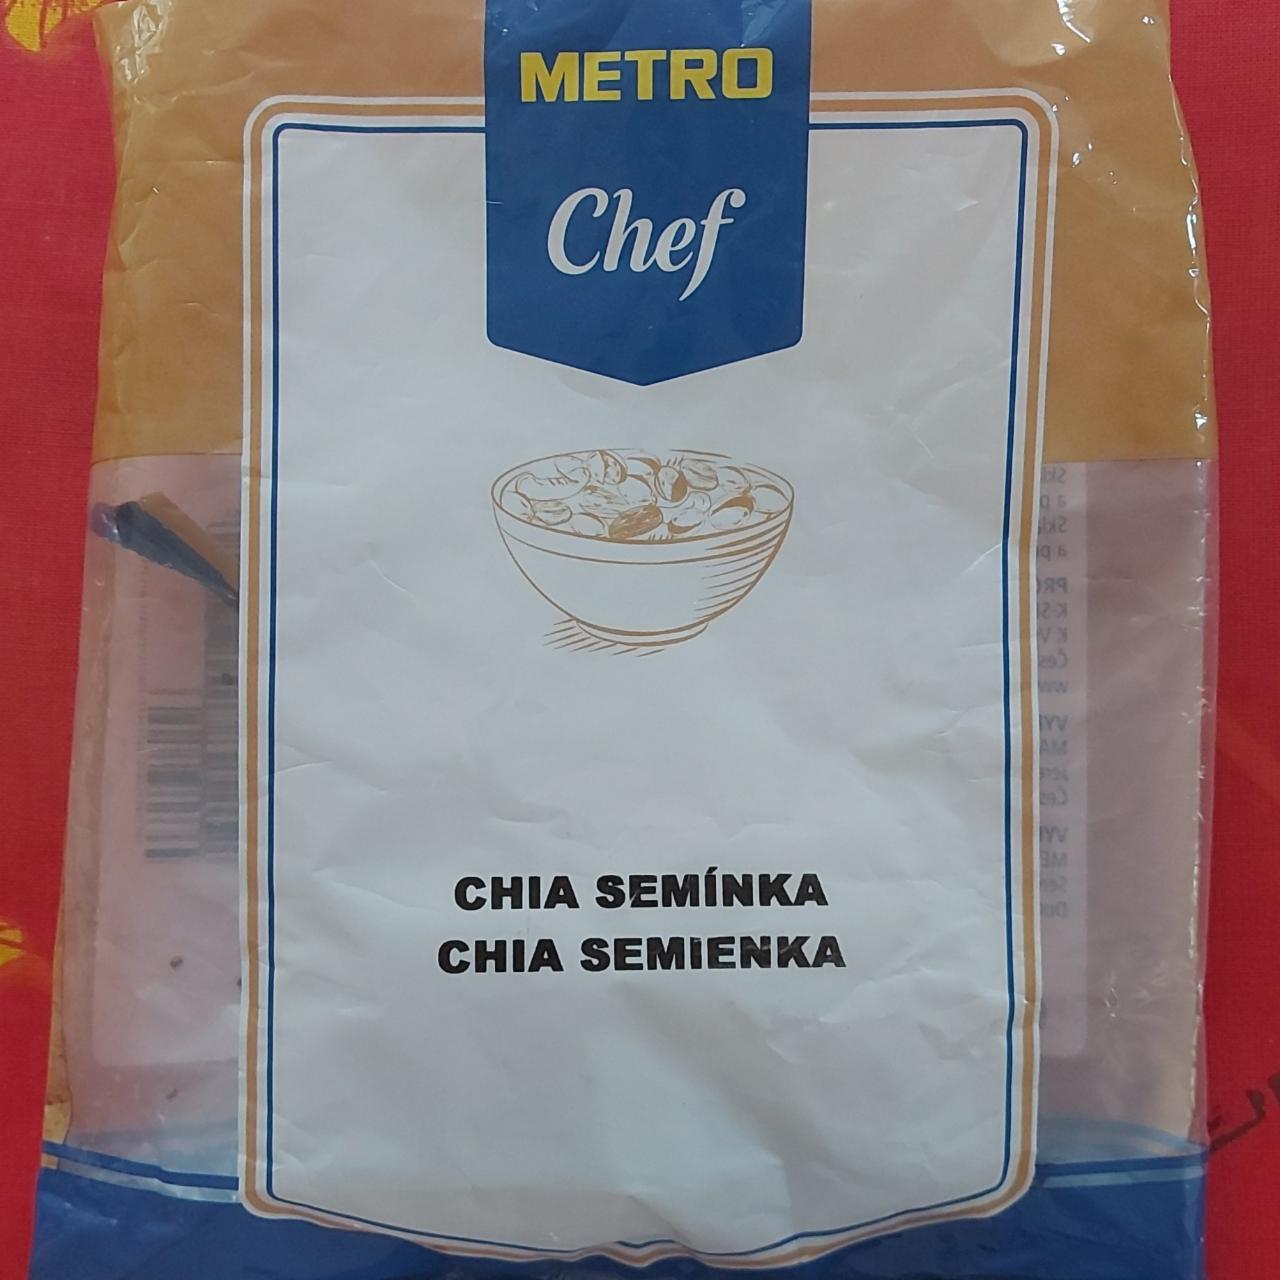 Fotografie - Chia semienka Metro Chef